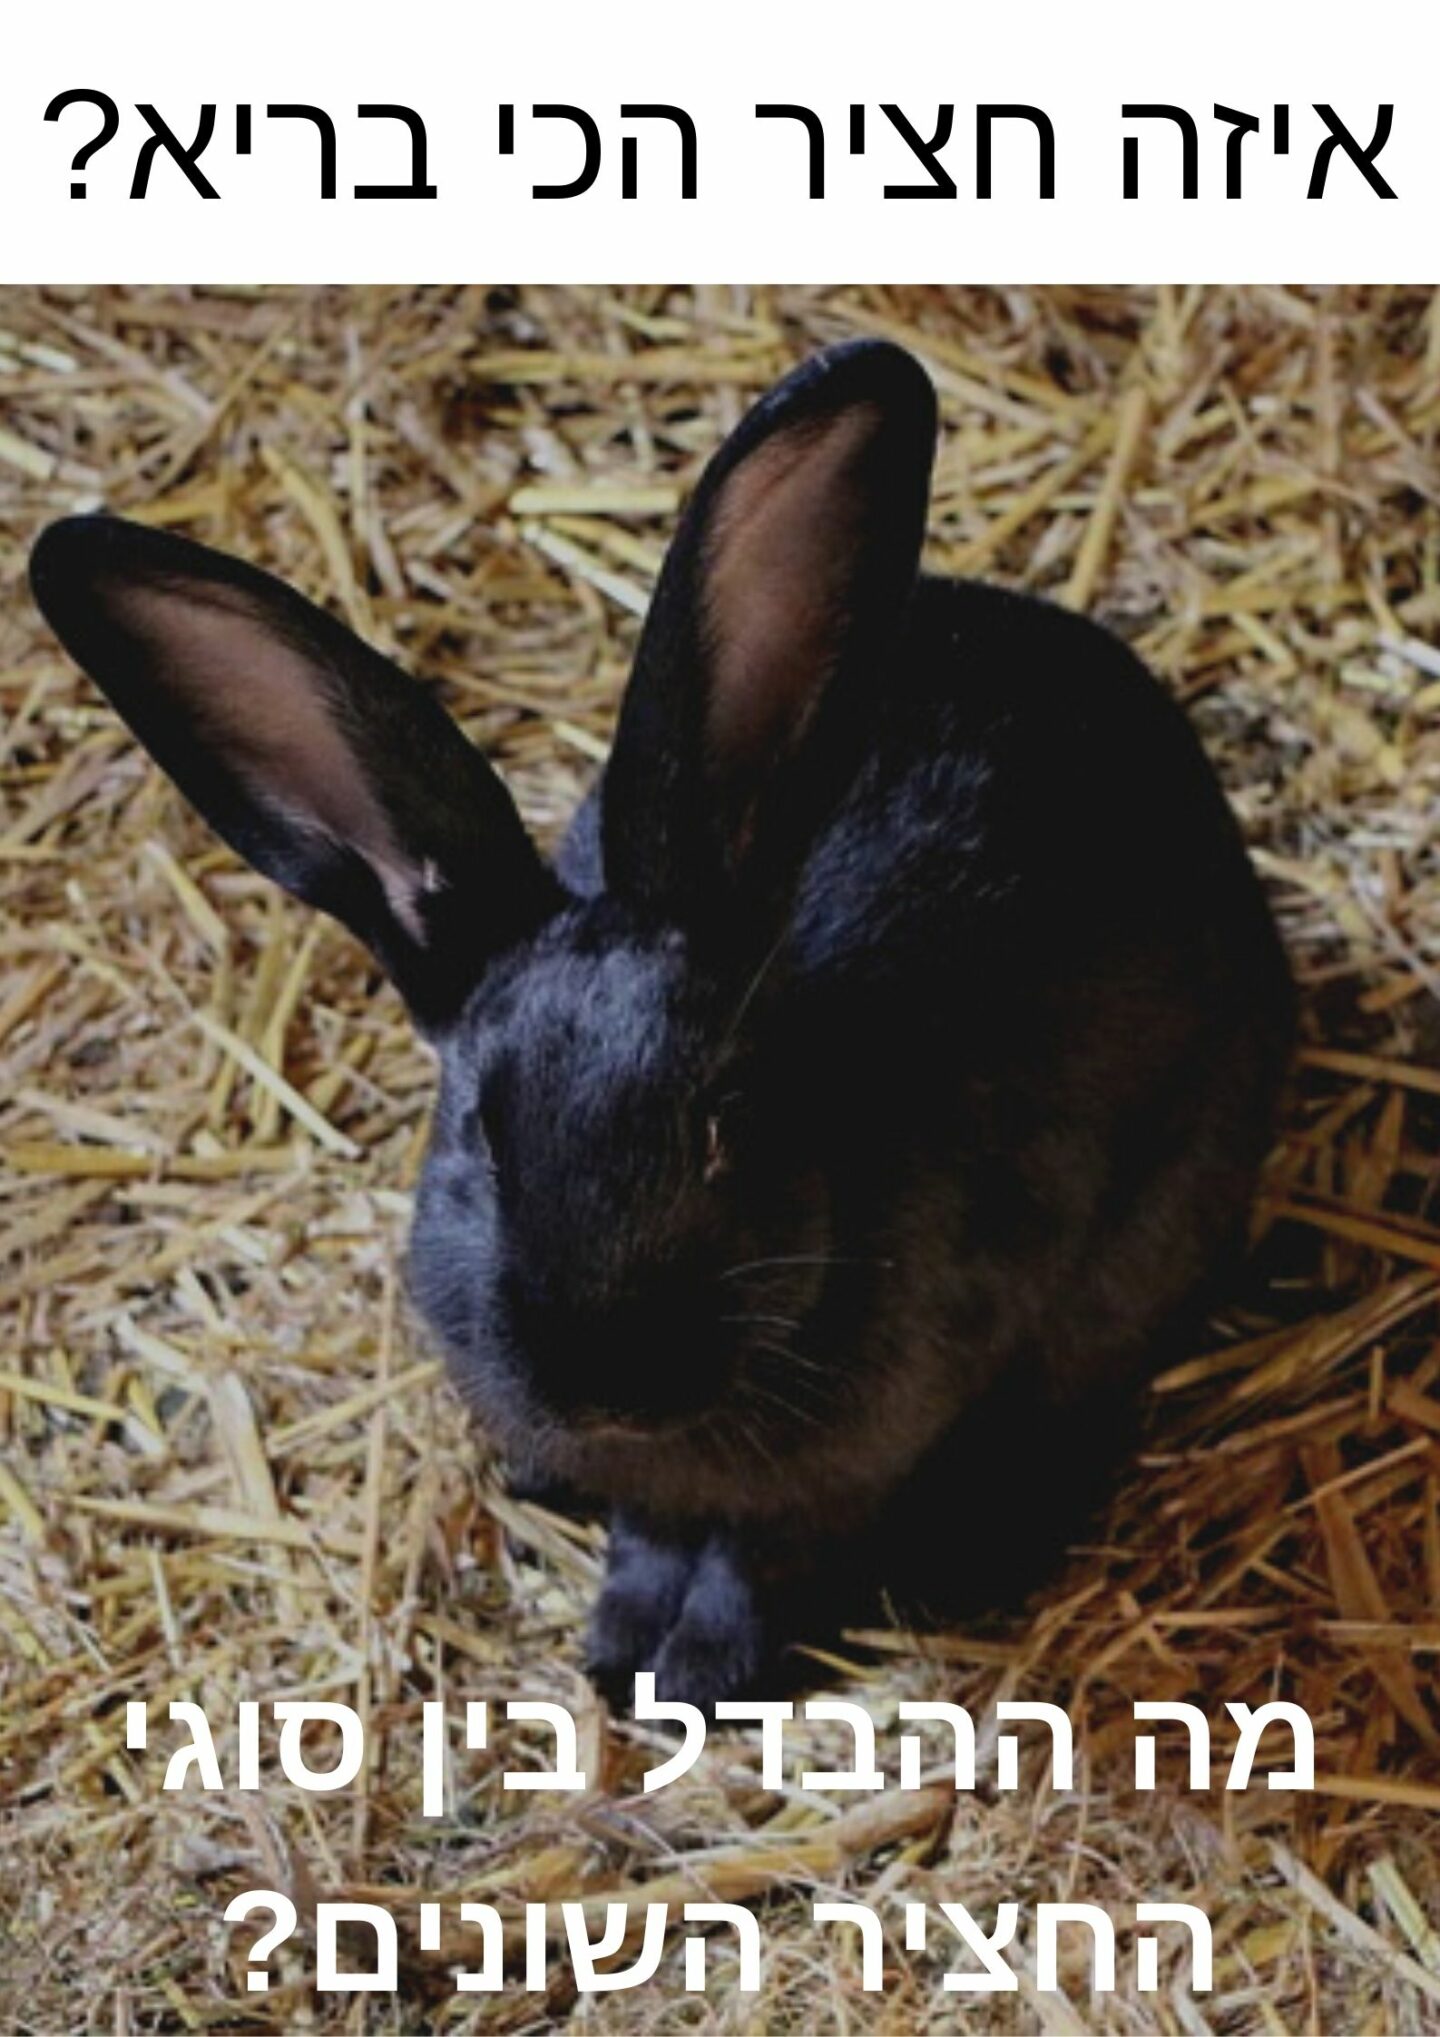 rabbit-hay-banner